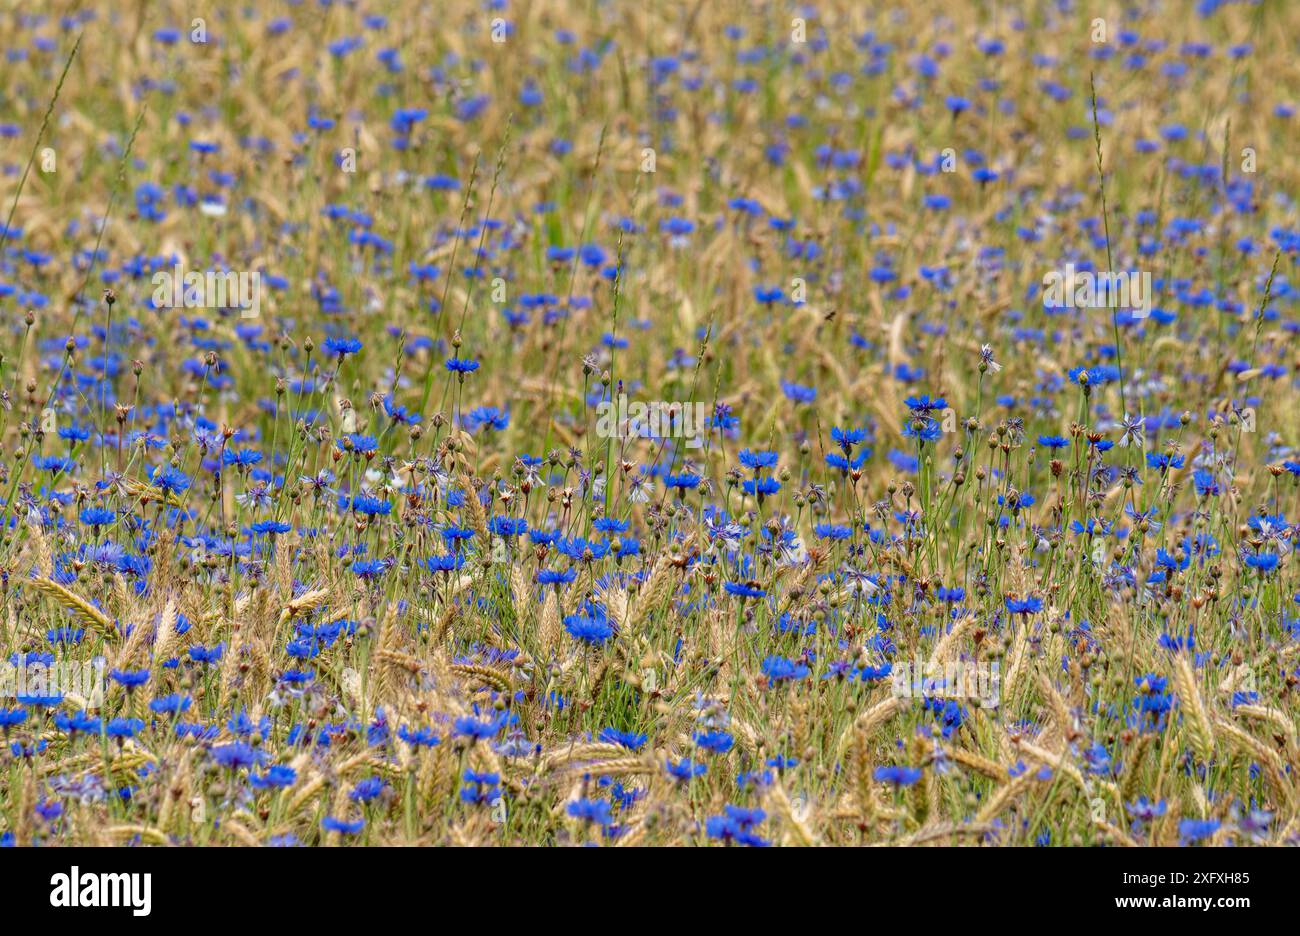 Blaue Kornblumen Centaurea cyanus in einem Getreidefeld, Bayern, Deutschland, Europa Blaue Kornblumen Centaurea cyanus in einem Getreidefeld, Bayern, Stock Photo